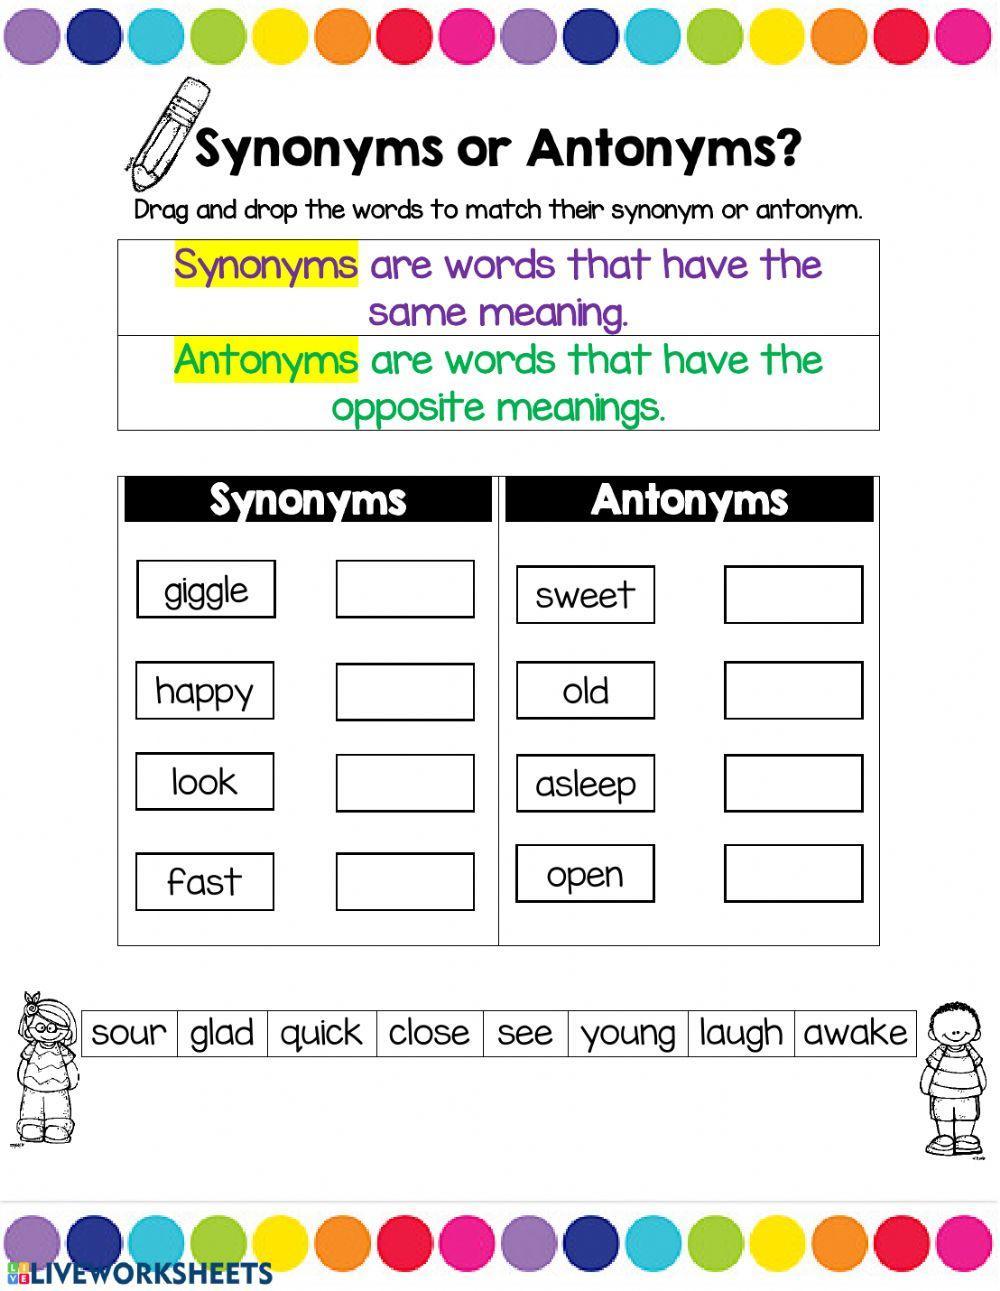 synonyms or antonyms